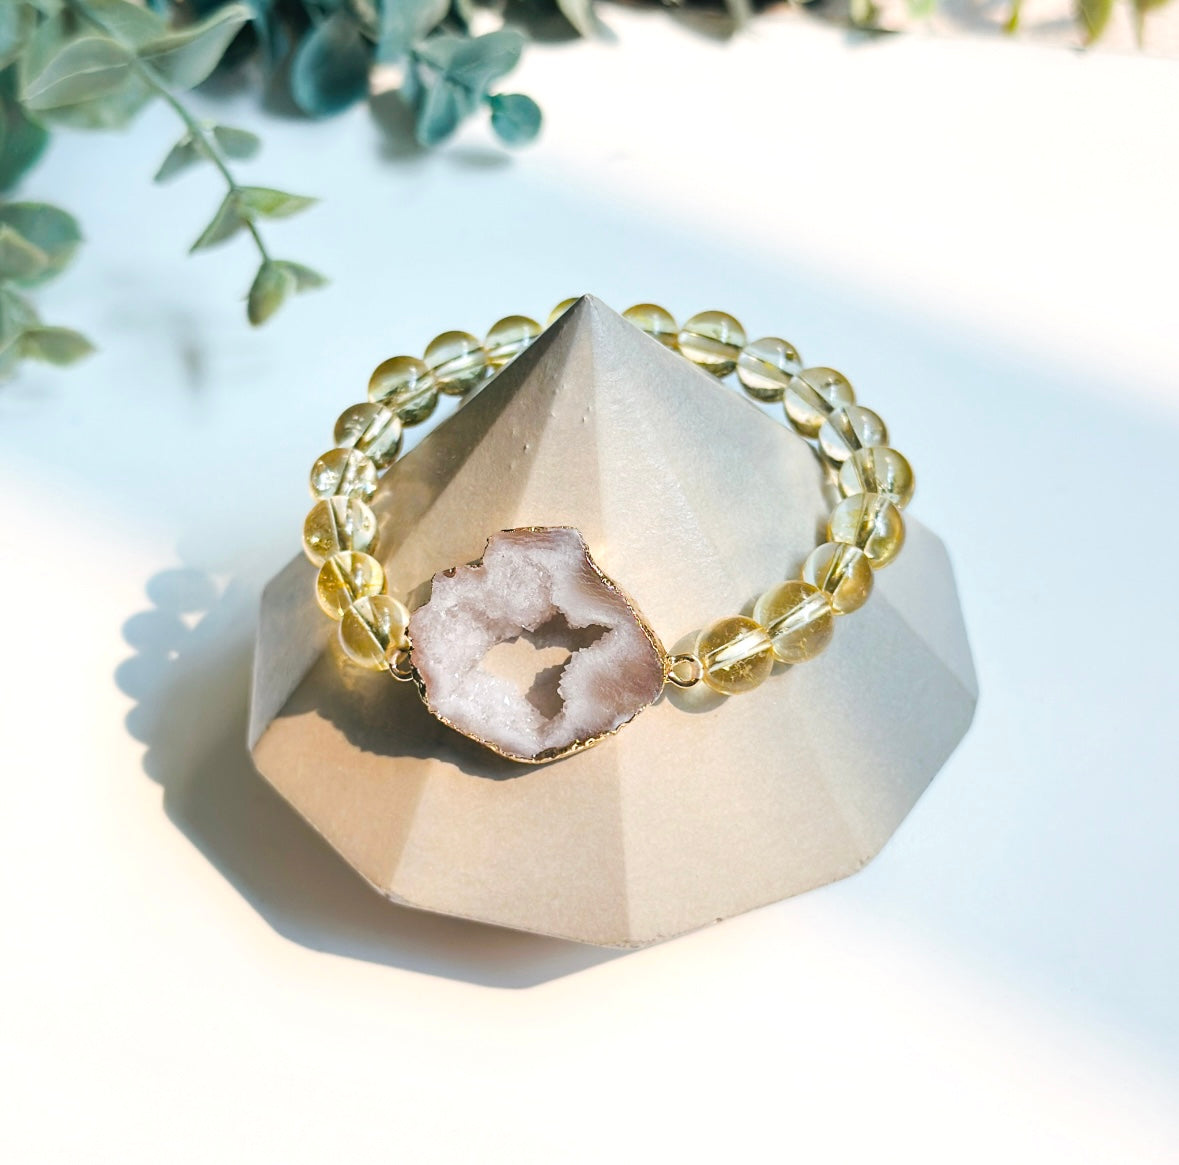 Gemstone Bracelet Citrine gemstone with White Druzy agate connector